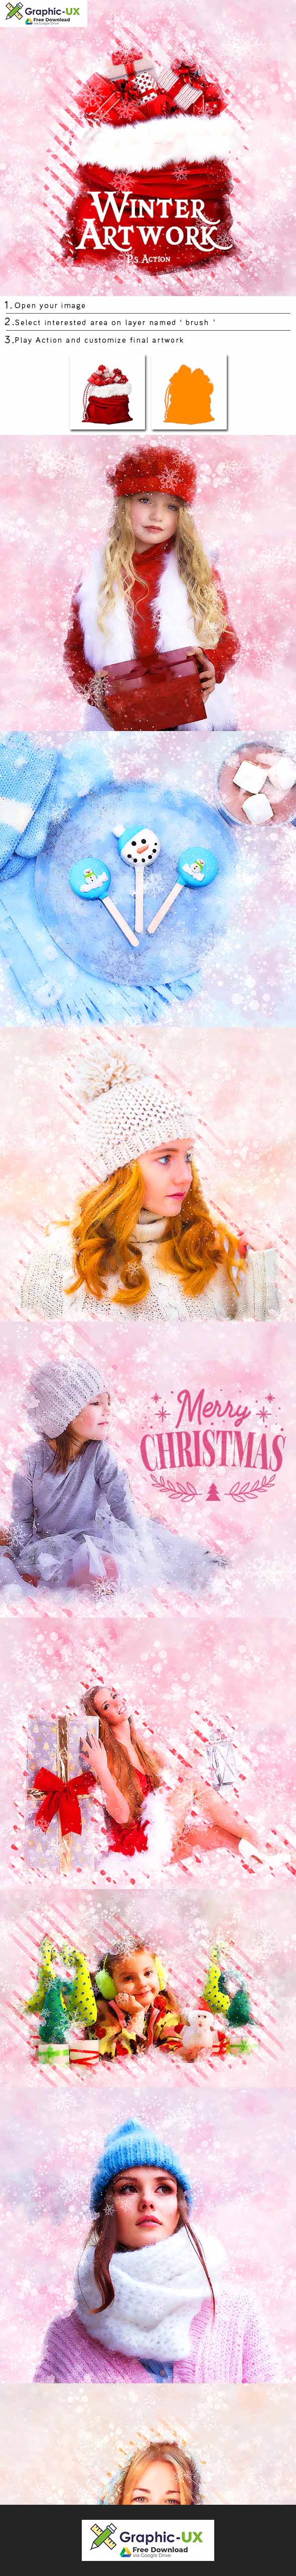 Merriness - Winter Artwork Photoshop Action